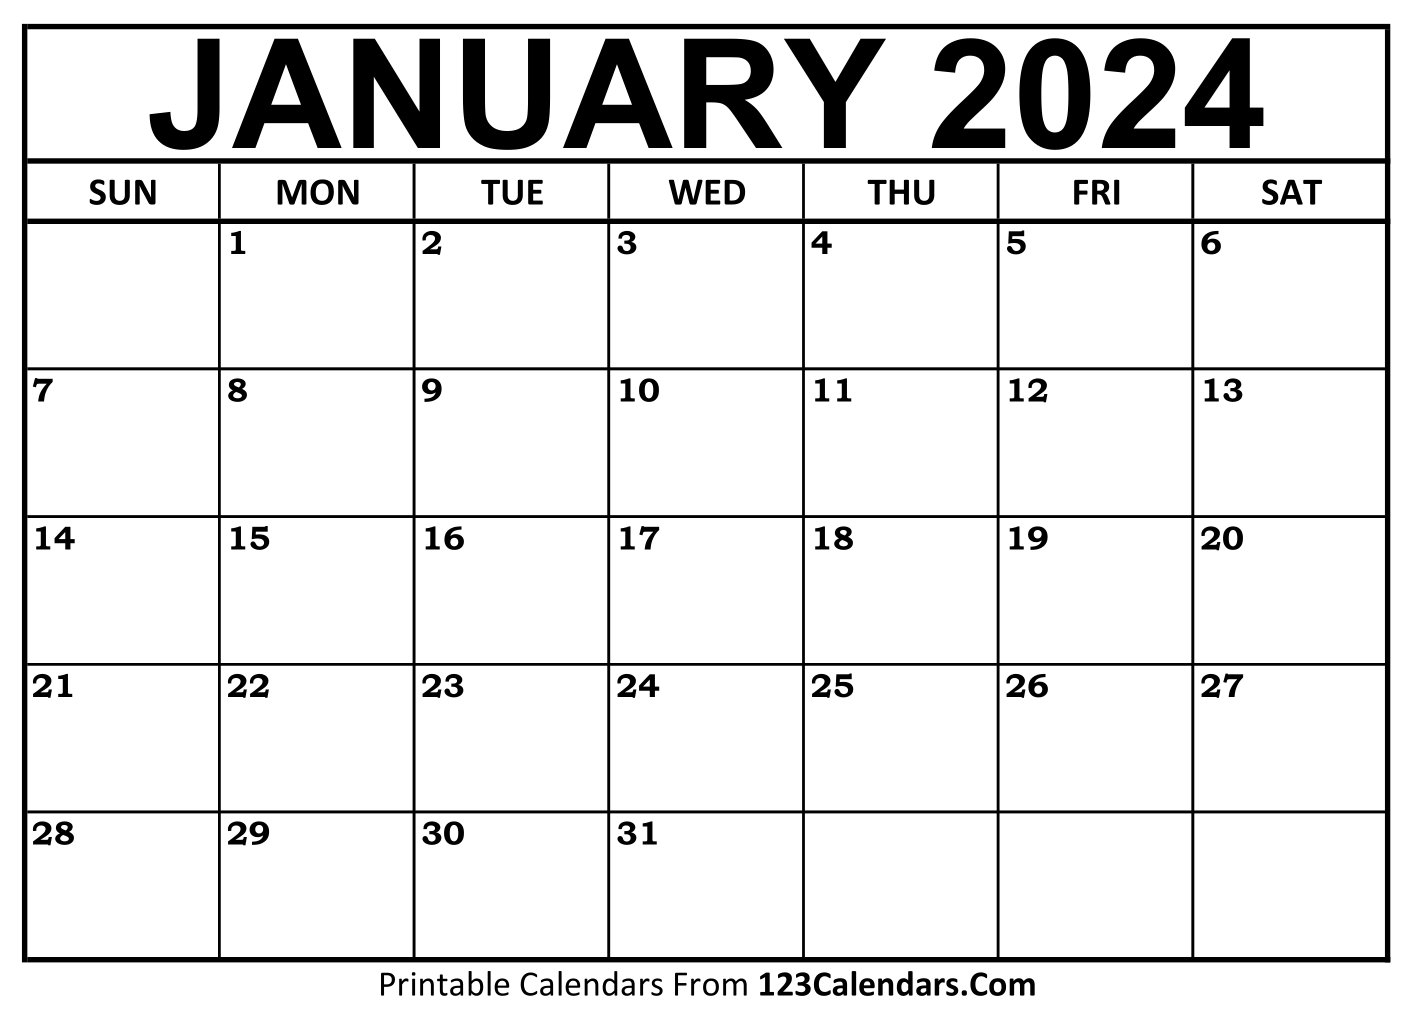 Printable January 2024 Calendar Templates - 123Calendars for Januar 2024 Calendar Printable